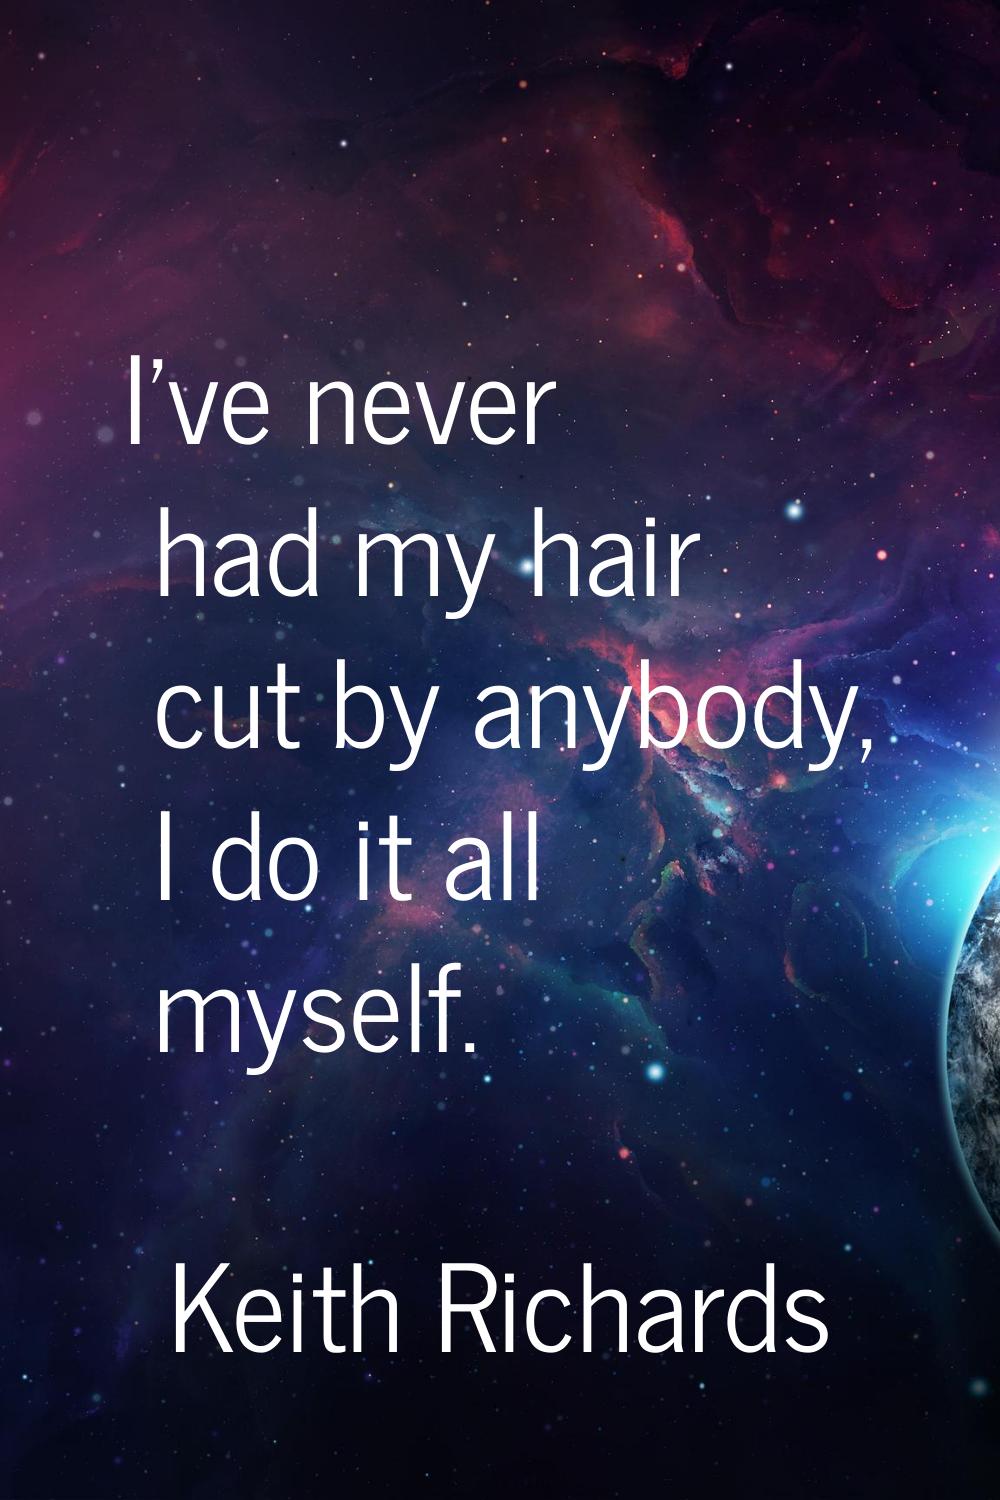 I've never had my hair cut by anybody, I do it all myself.